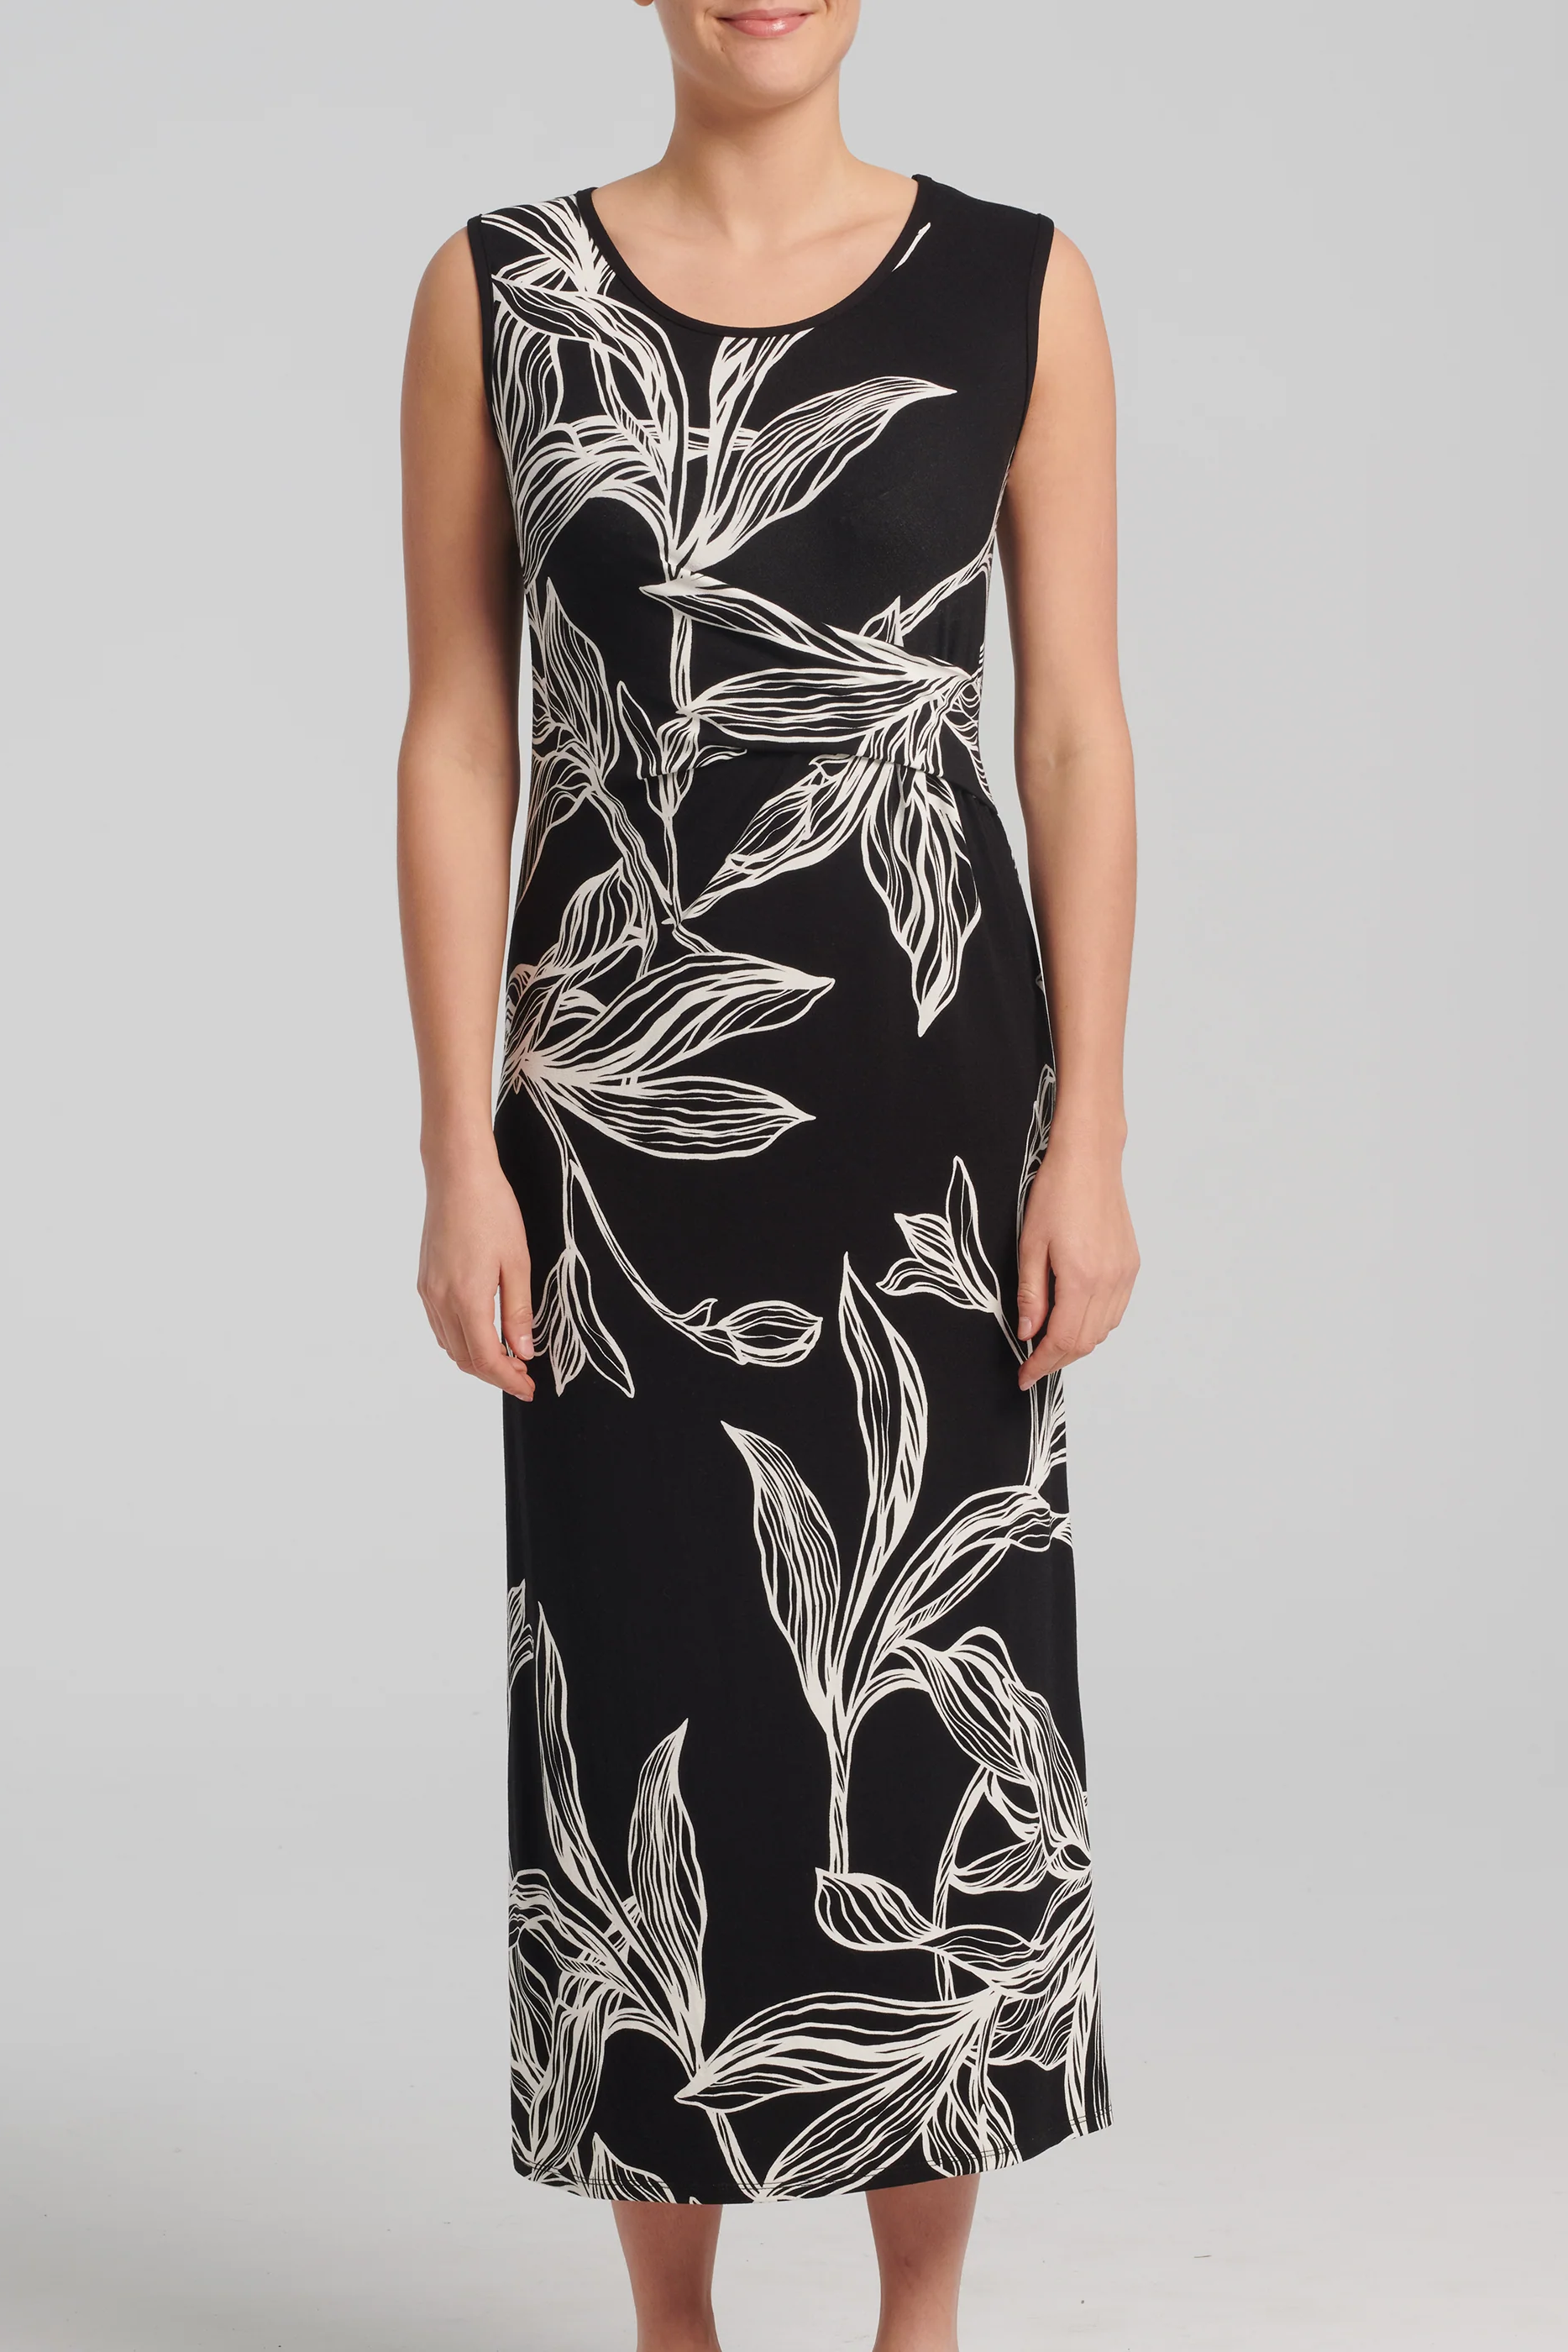 Hemera Dress by Kollontai, Black and White leaf print, sleeveless, round neck, straight cut, pleats at waist, midi-length, sizes XS to XXL, made in Montreal 